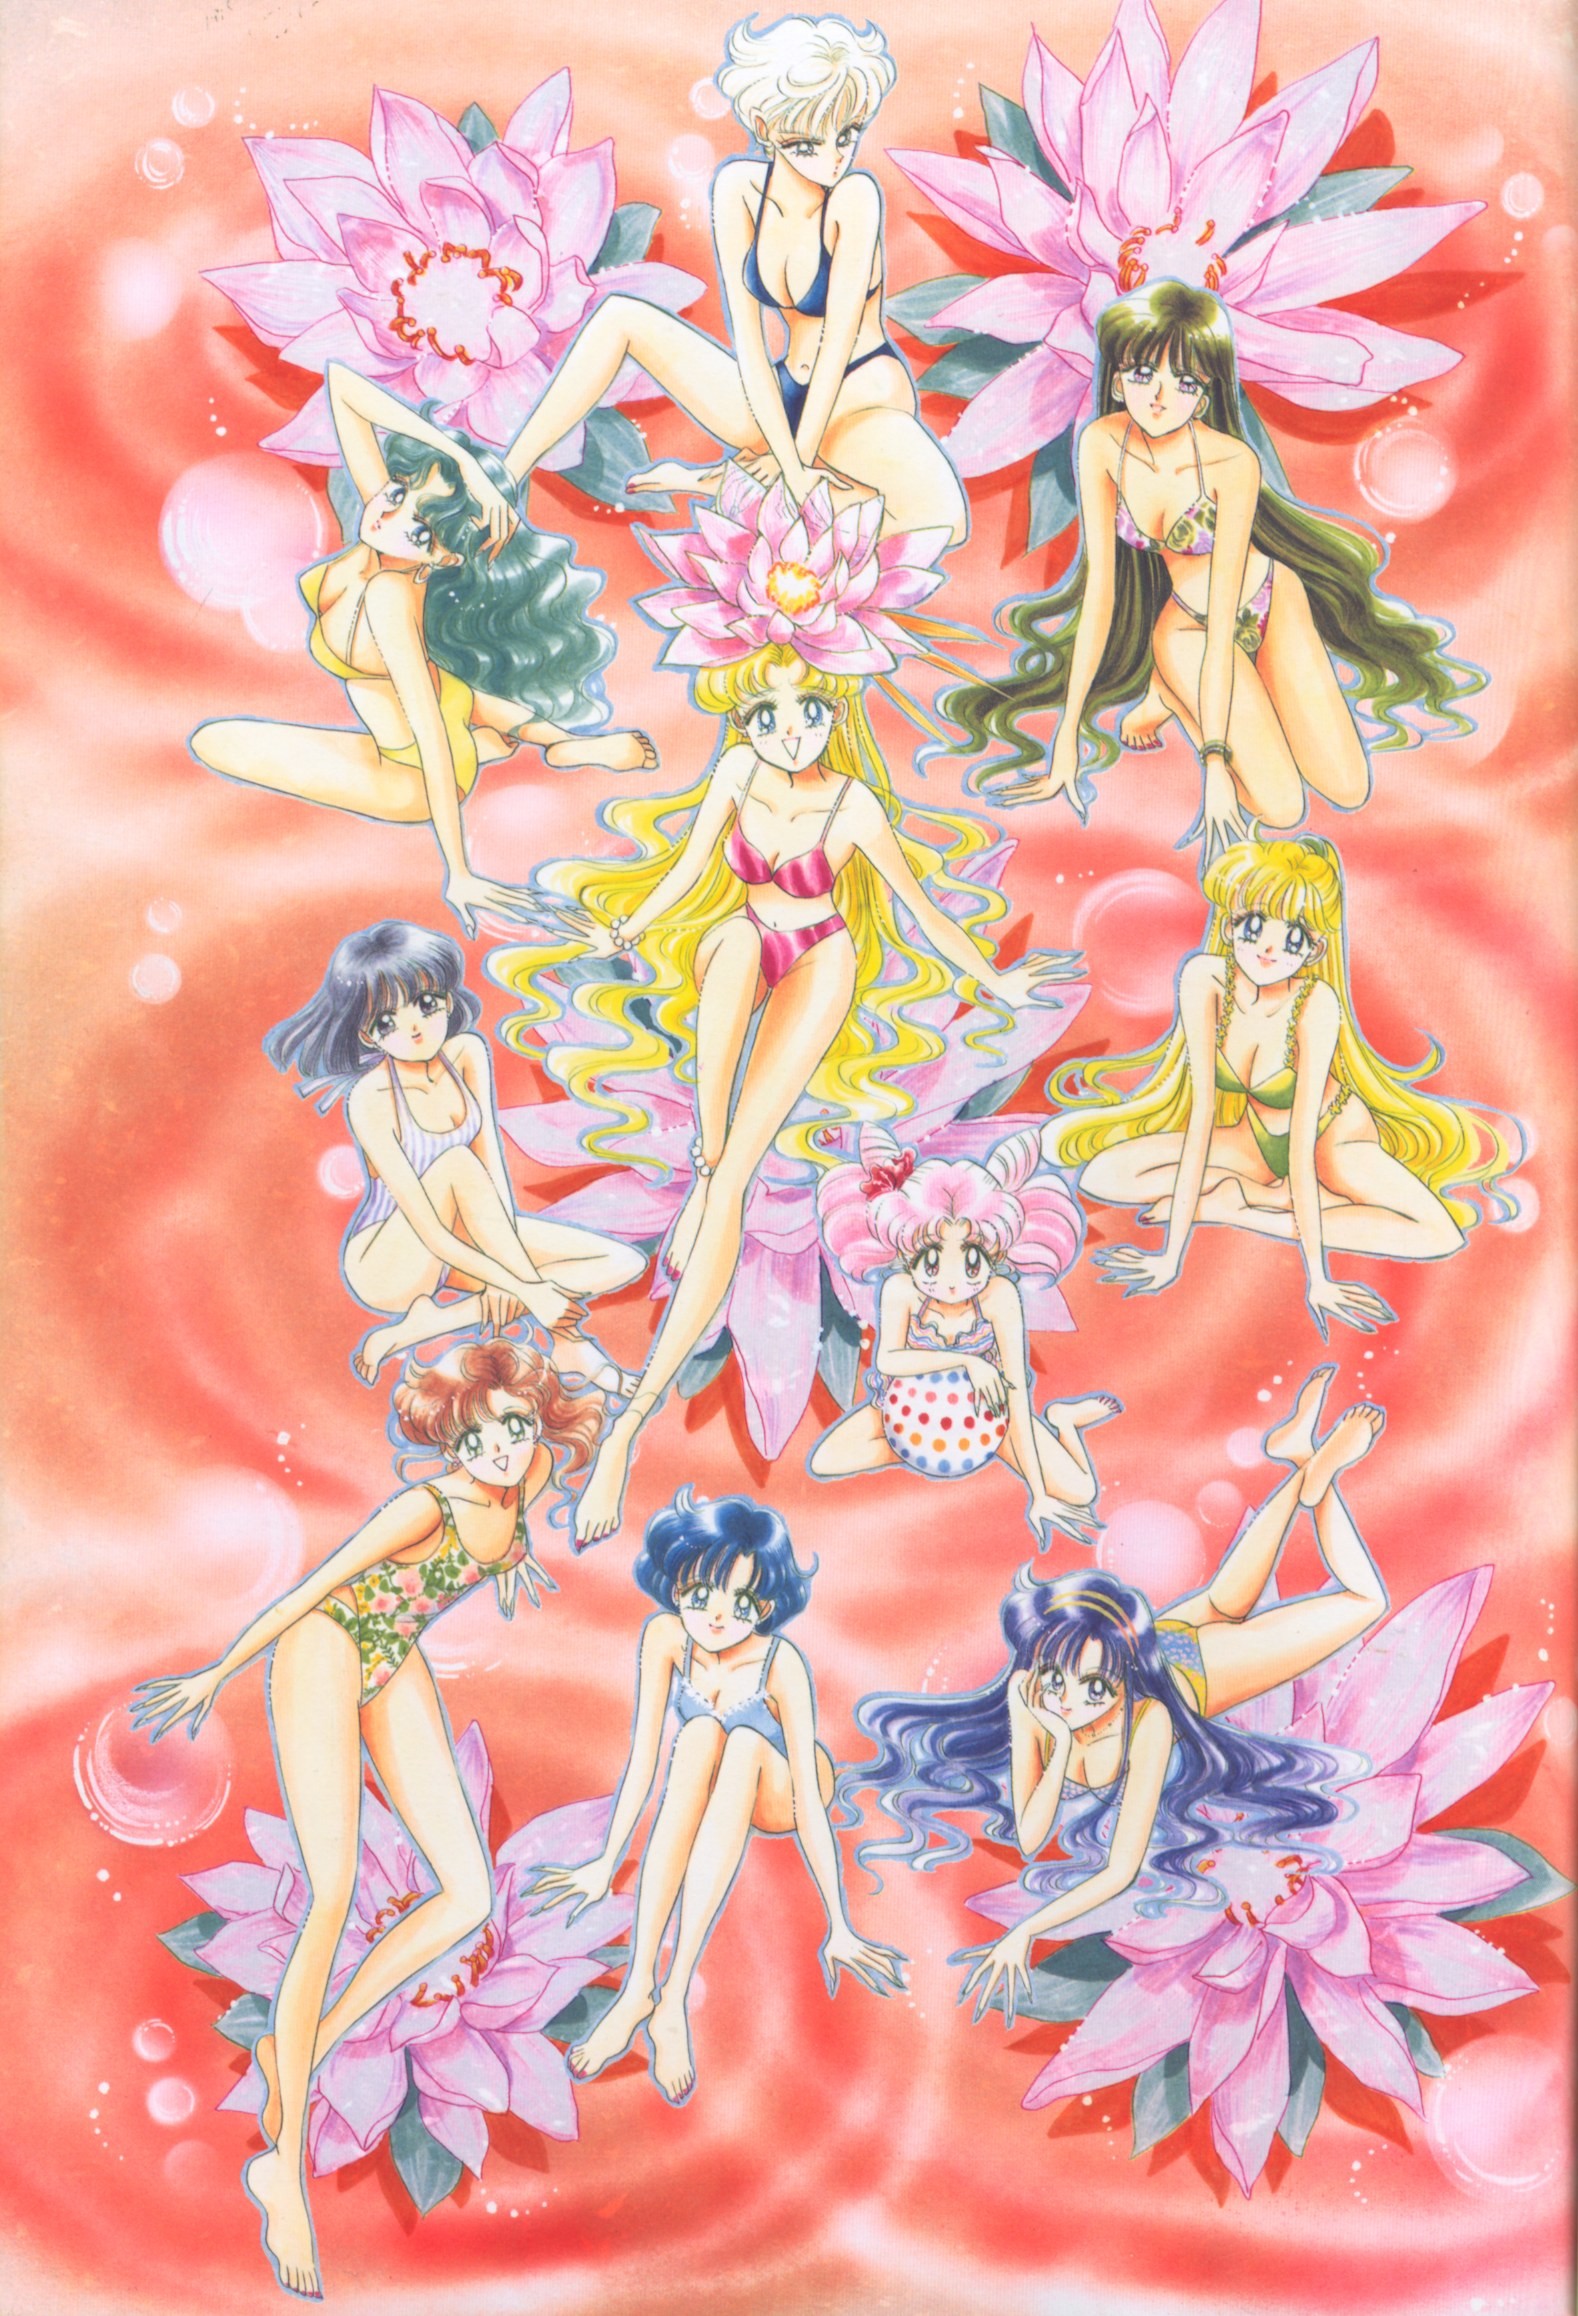 Bishoujo Senshi Sailor Moon Original Picture Collection Vol. IV Manga Style